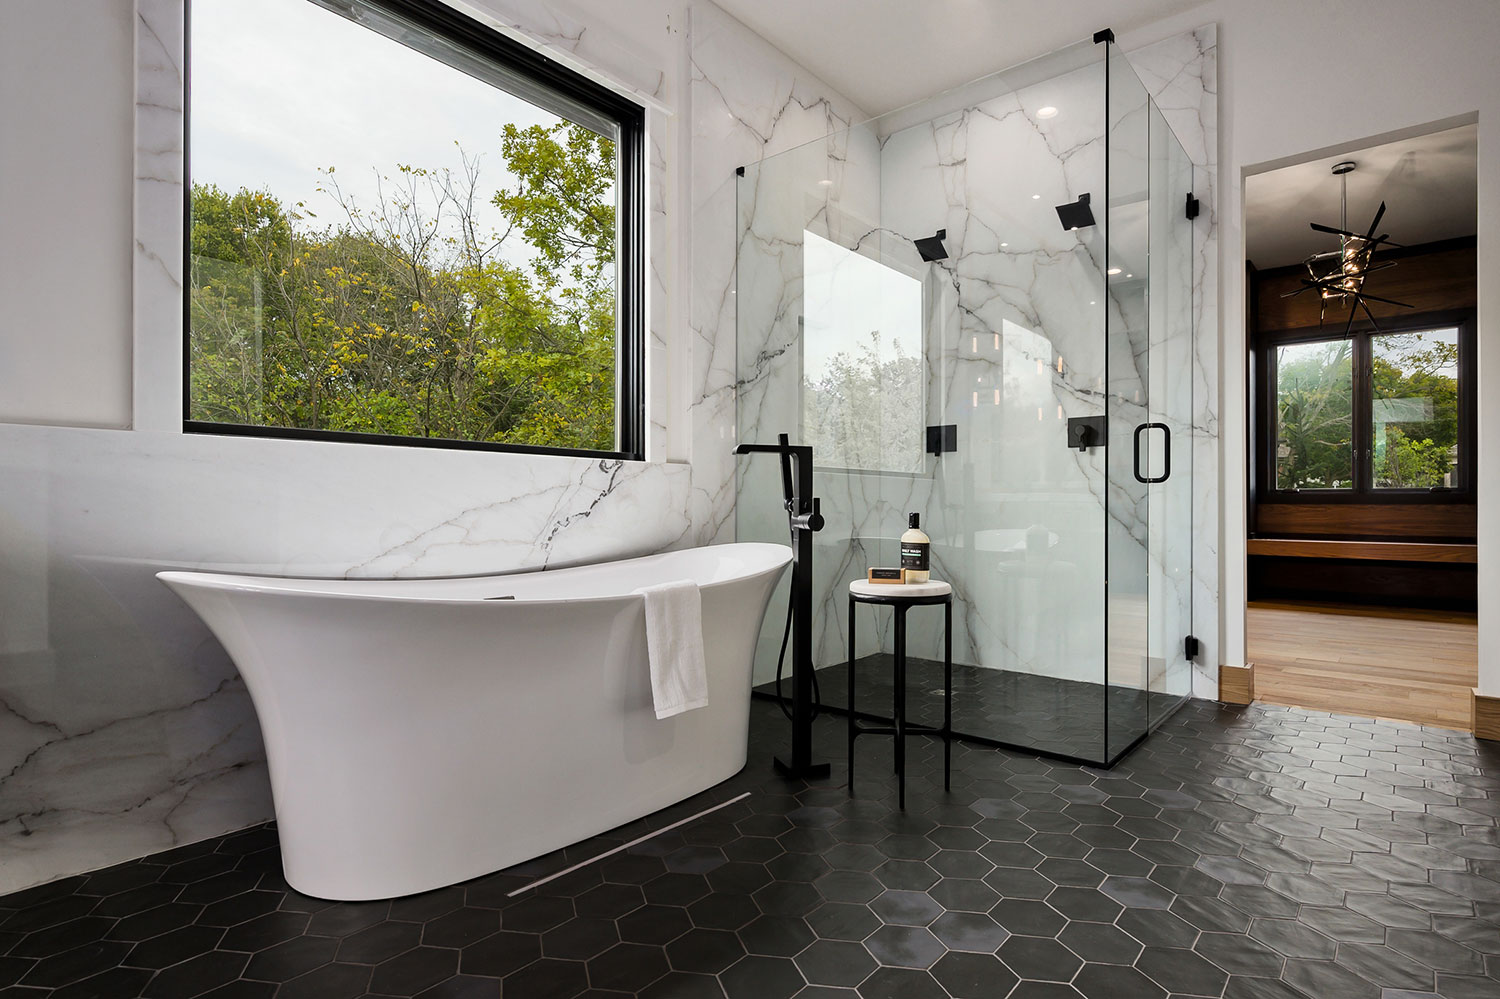 Five Unique Home Design Trends of 2022 in the East Bay - Bathroom Renovation - Bathroom Tiles - Custom Kitchens Bathroom Tiles